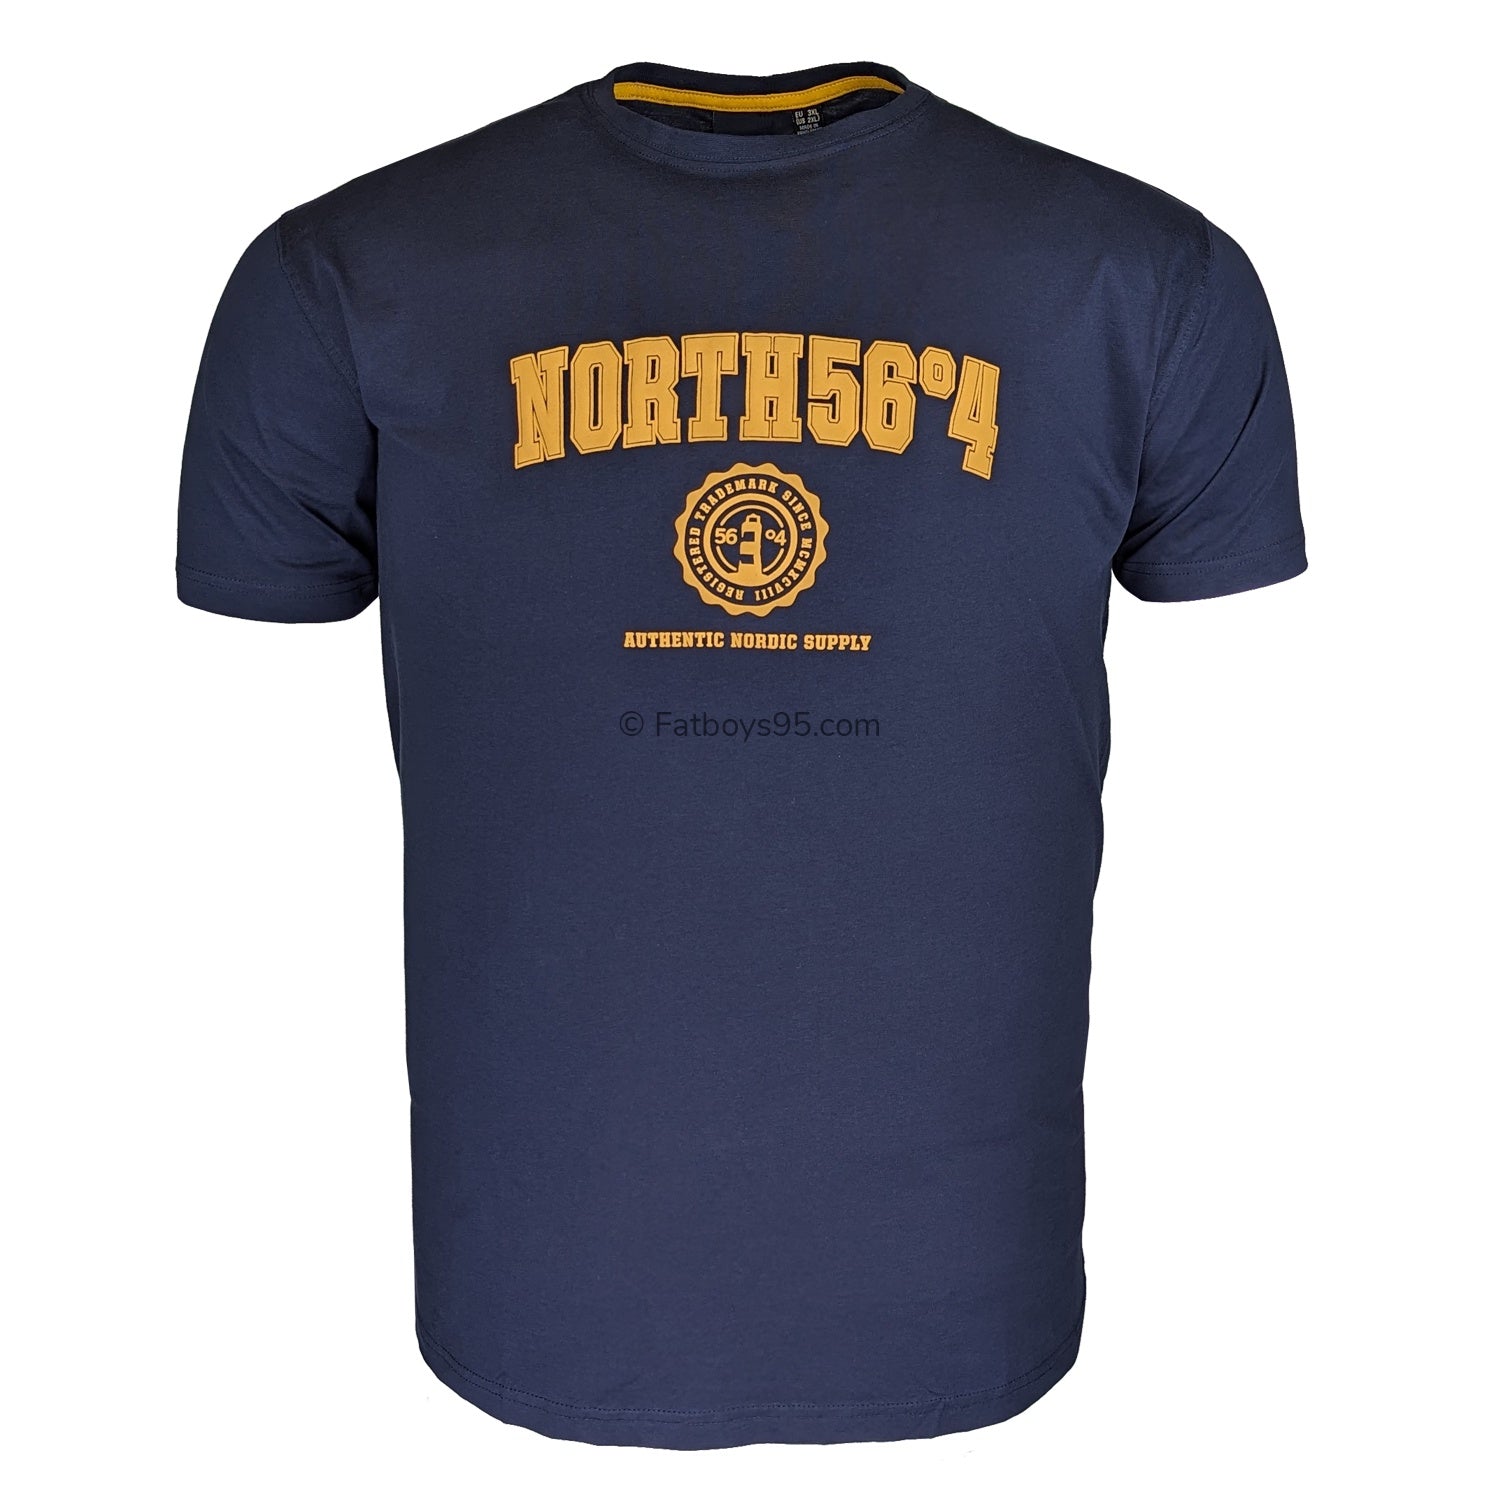 North 56°4 T-Shirt - 33112 - Navy 1